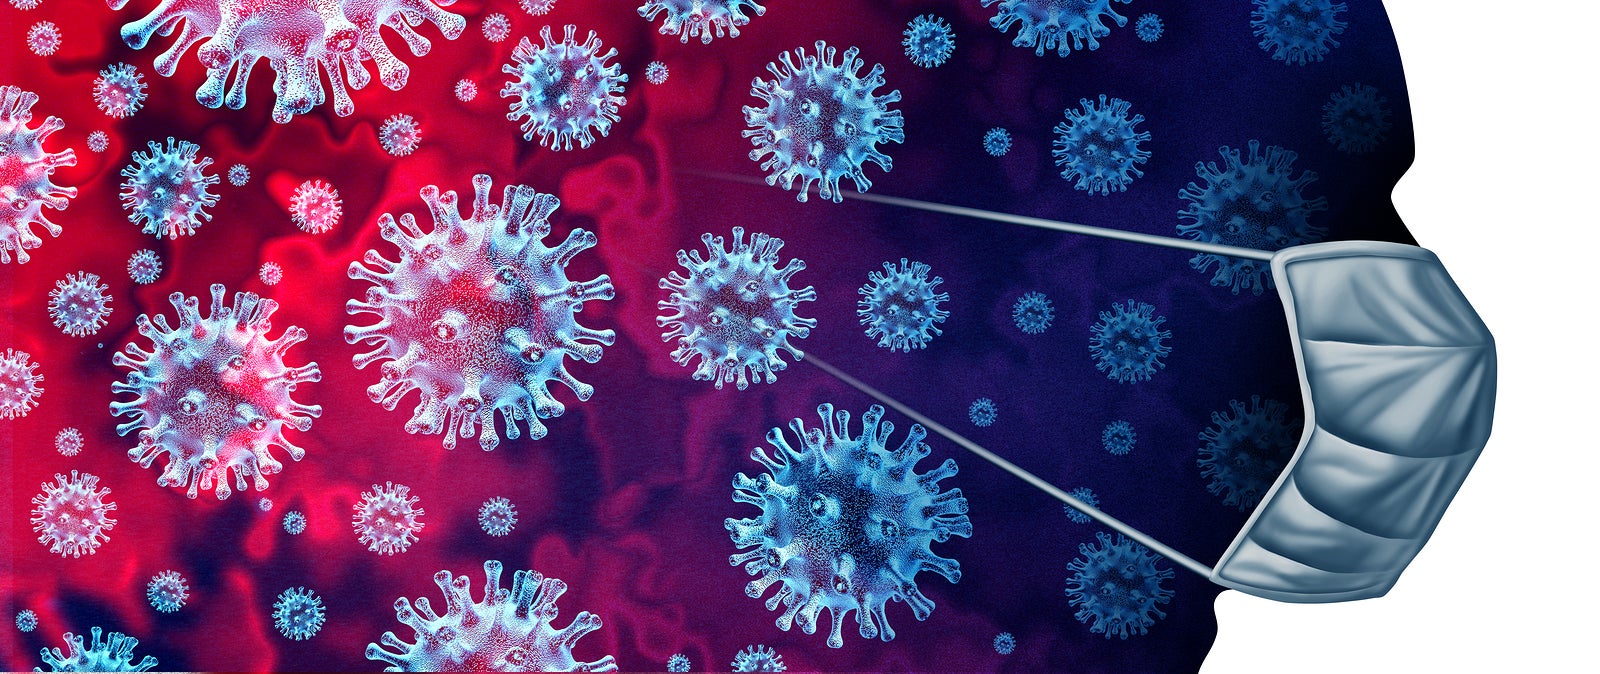 5 Ways to Lead Through the Coronavirus Crisis